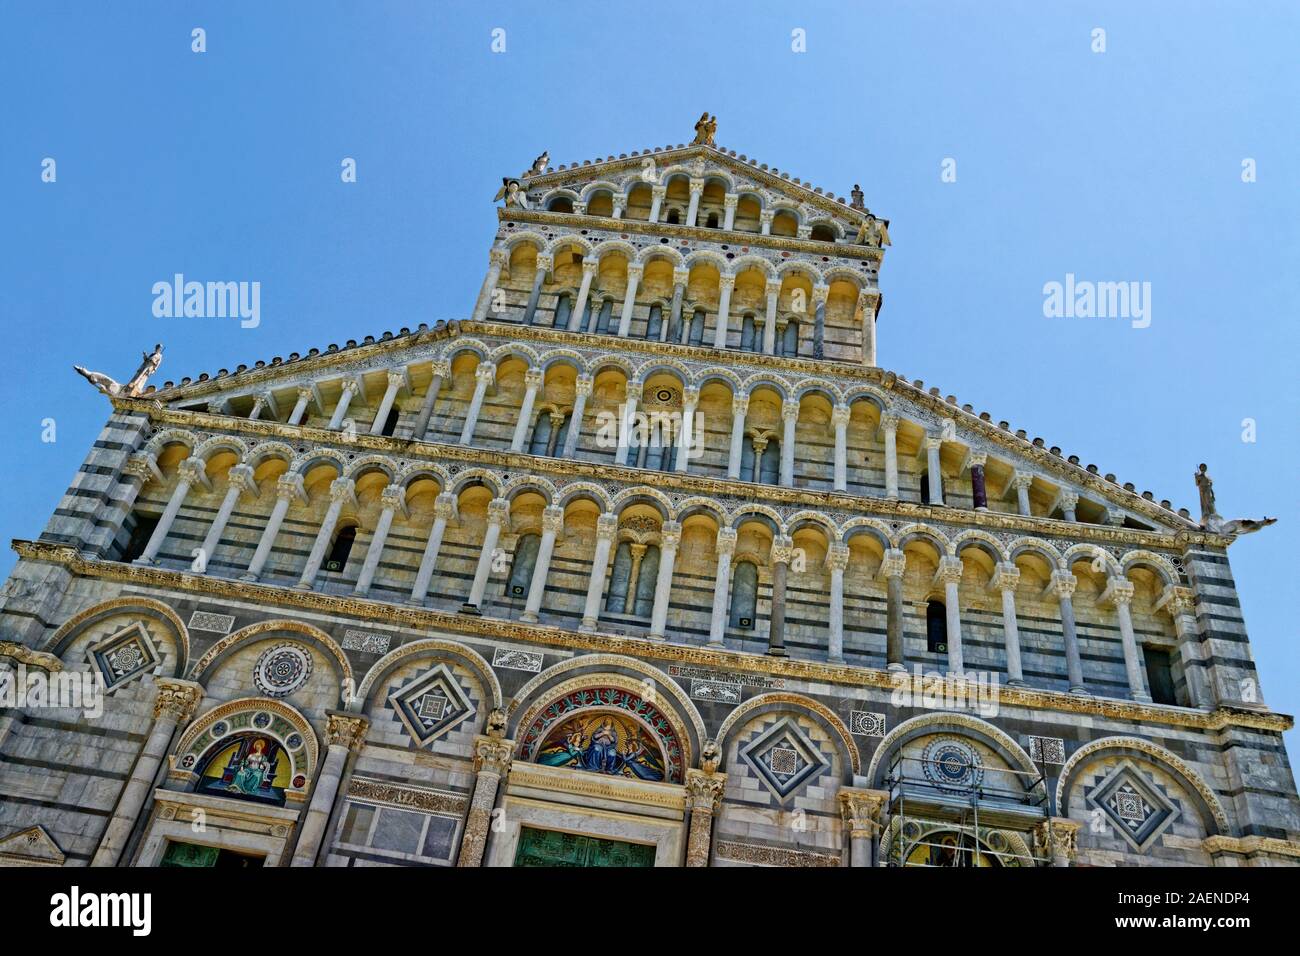 Fassade der Kathedrale der Himmelfahrt der Jungfrau Maria in Pisa, Toskana, Italien. Stockfoto